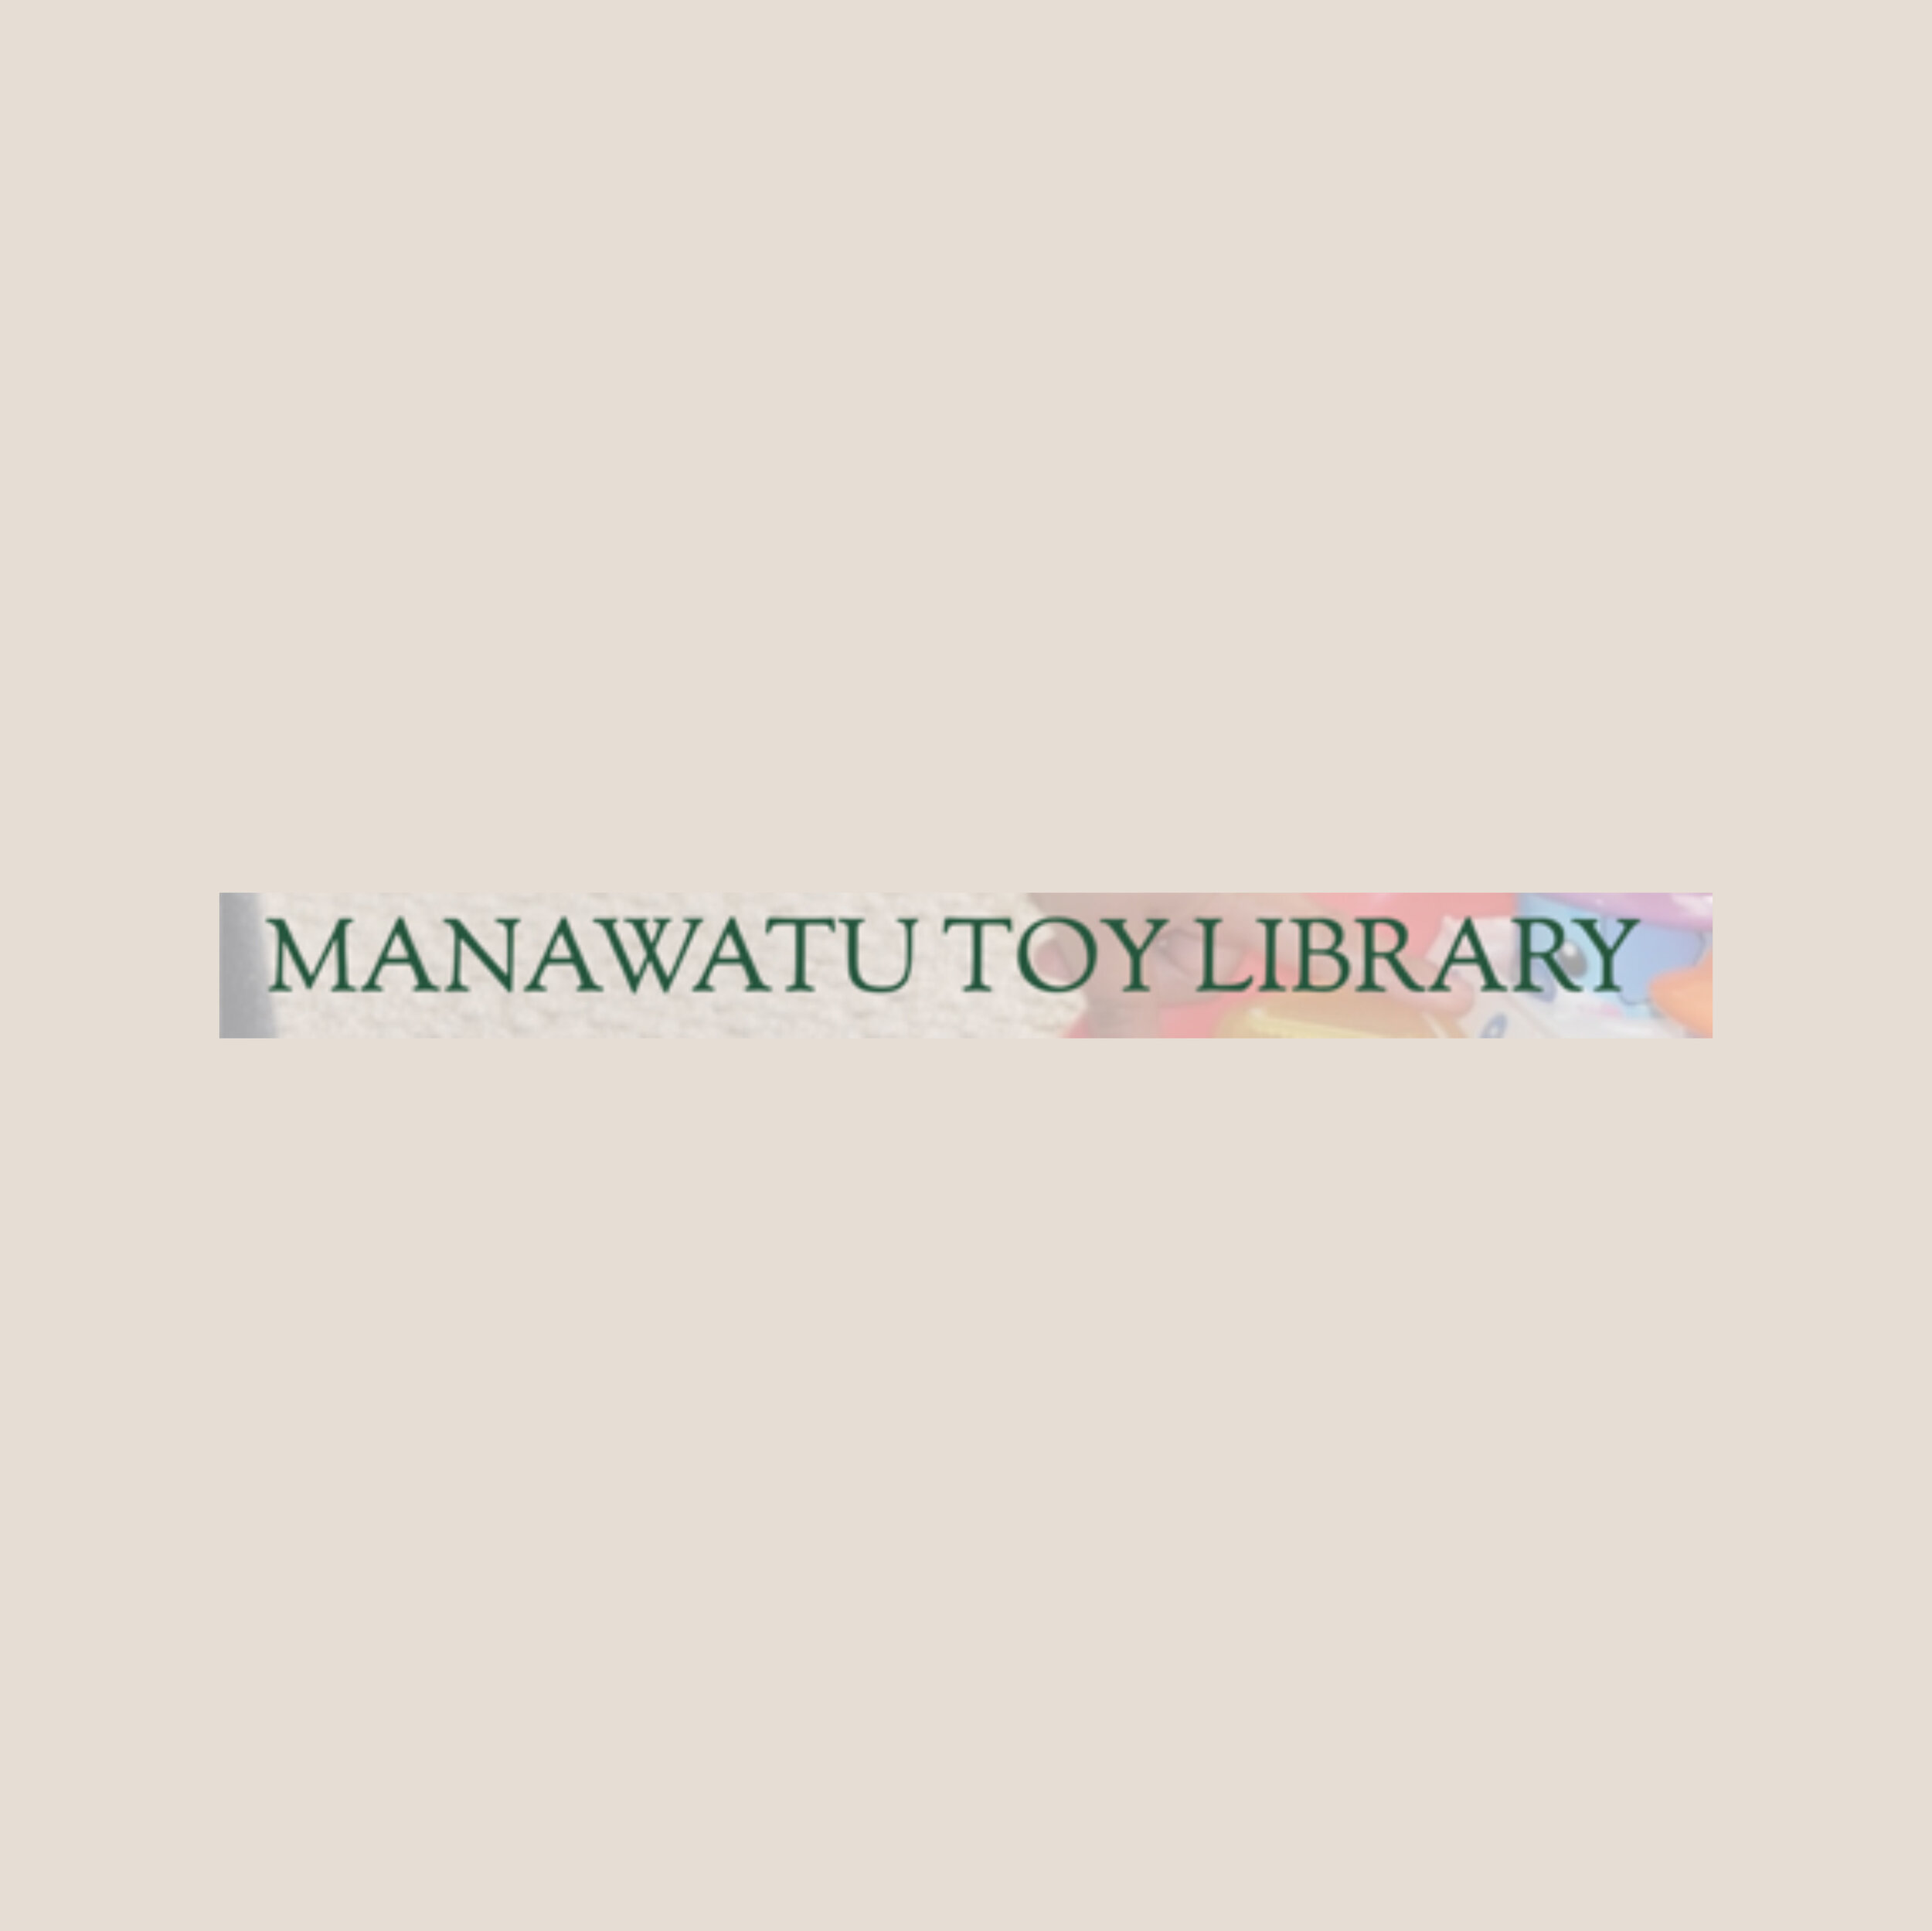 Manawatu Toy Library